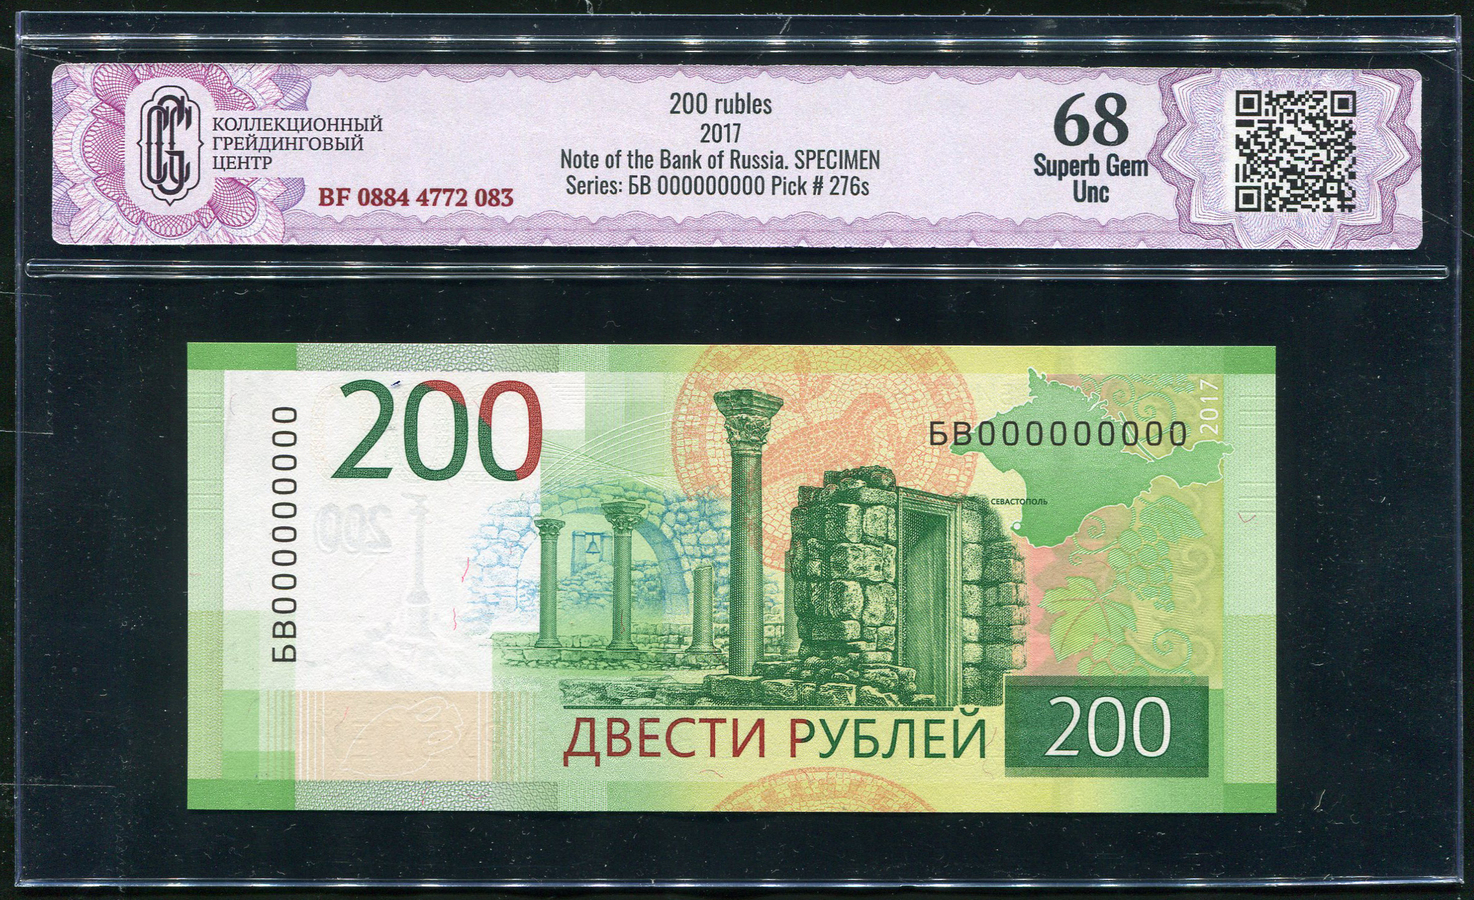 Заработок 200 рублей